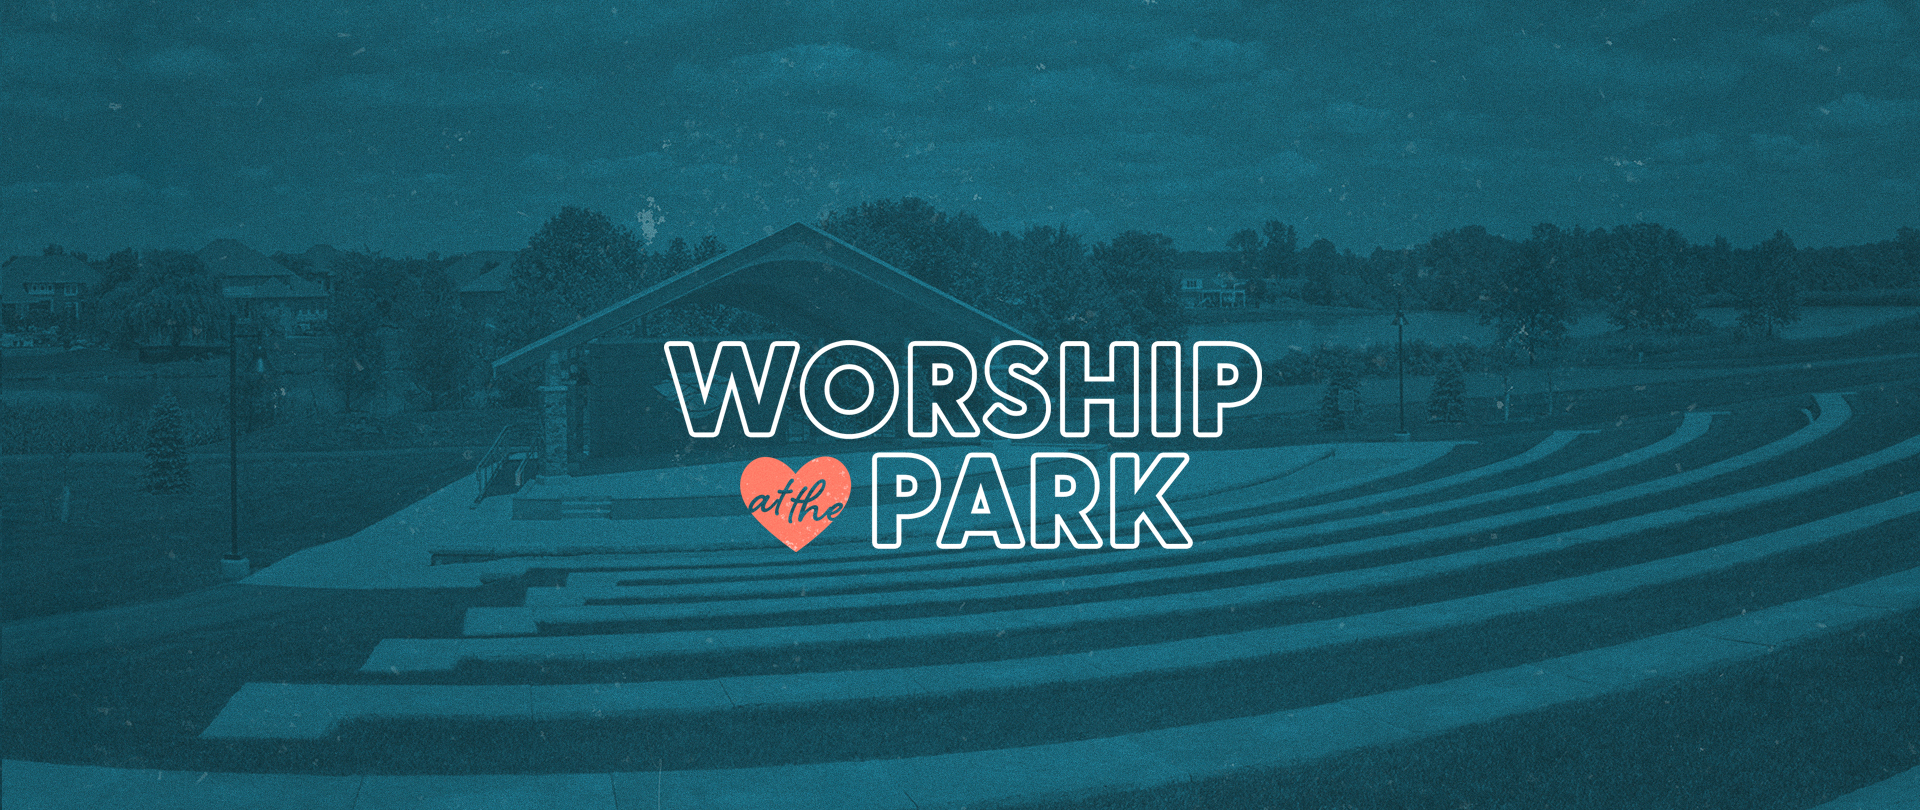 Worship at the Park
Sunday, August 7, 4:00-7:00 PM
Friedman Park
